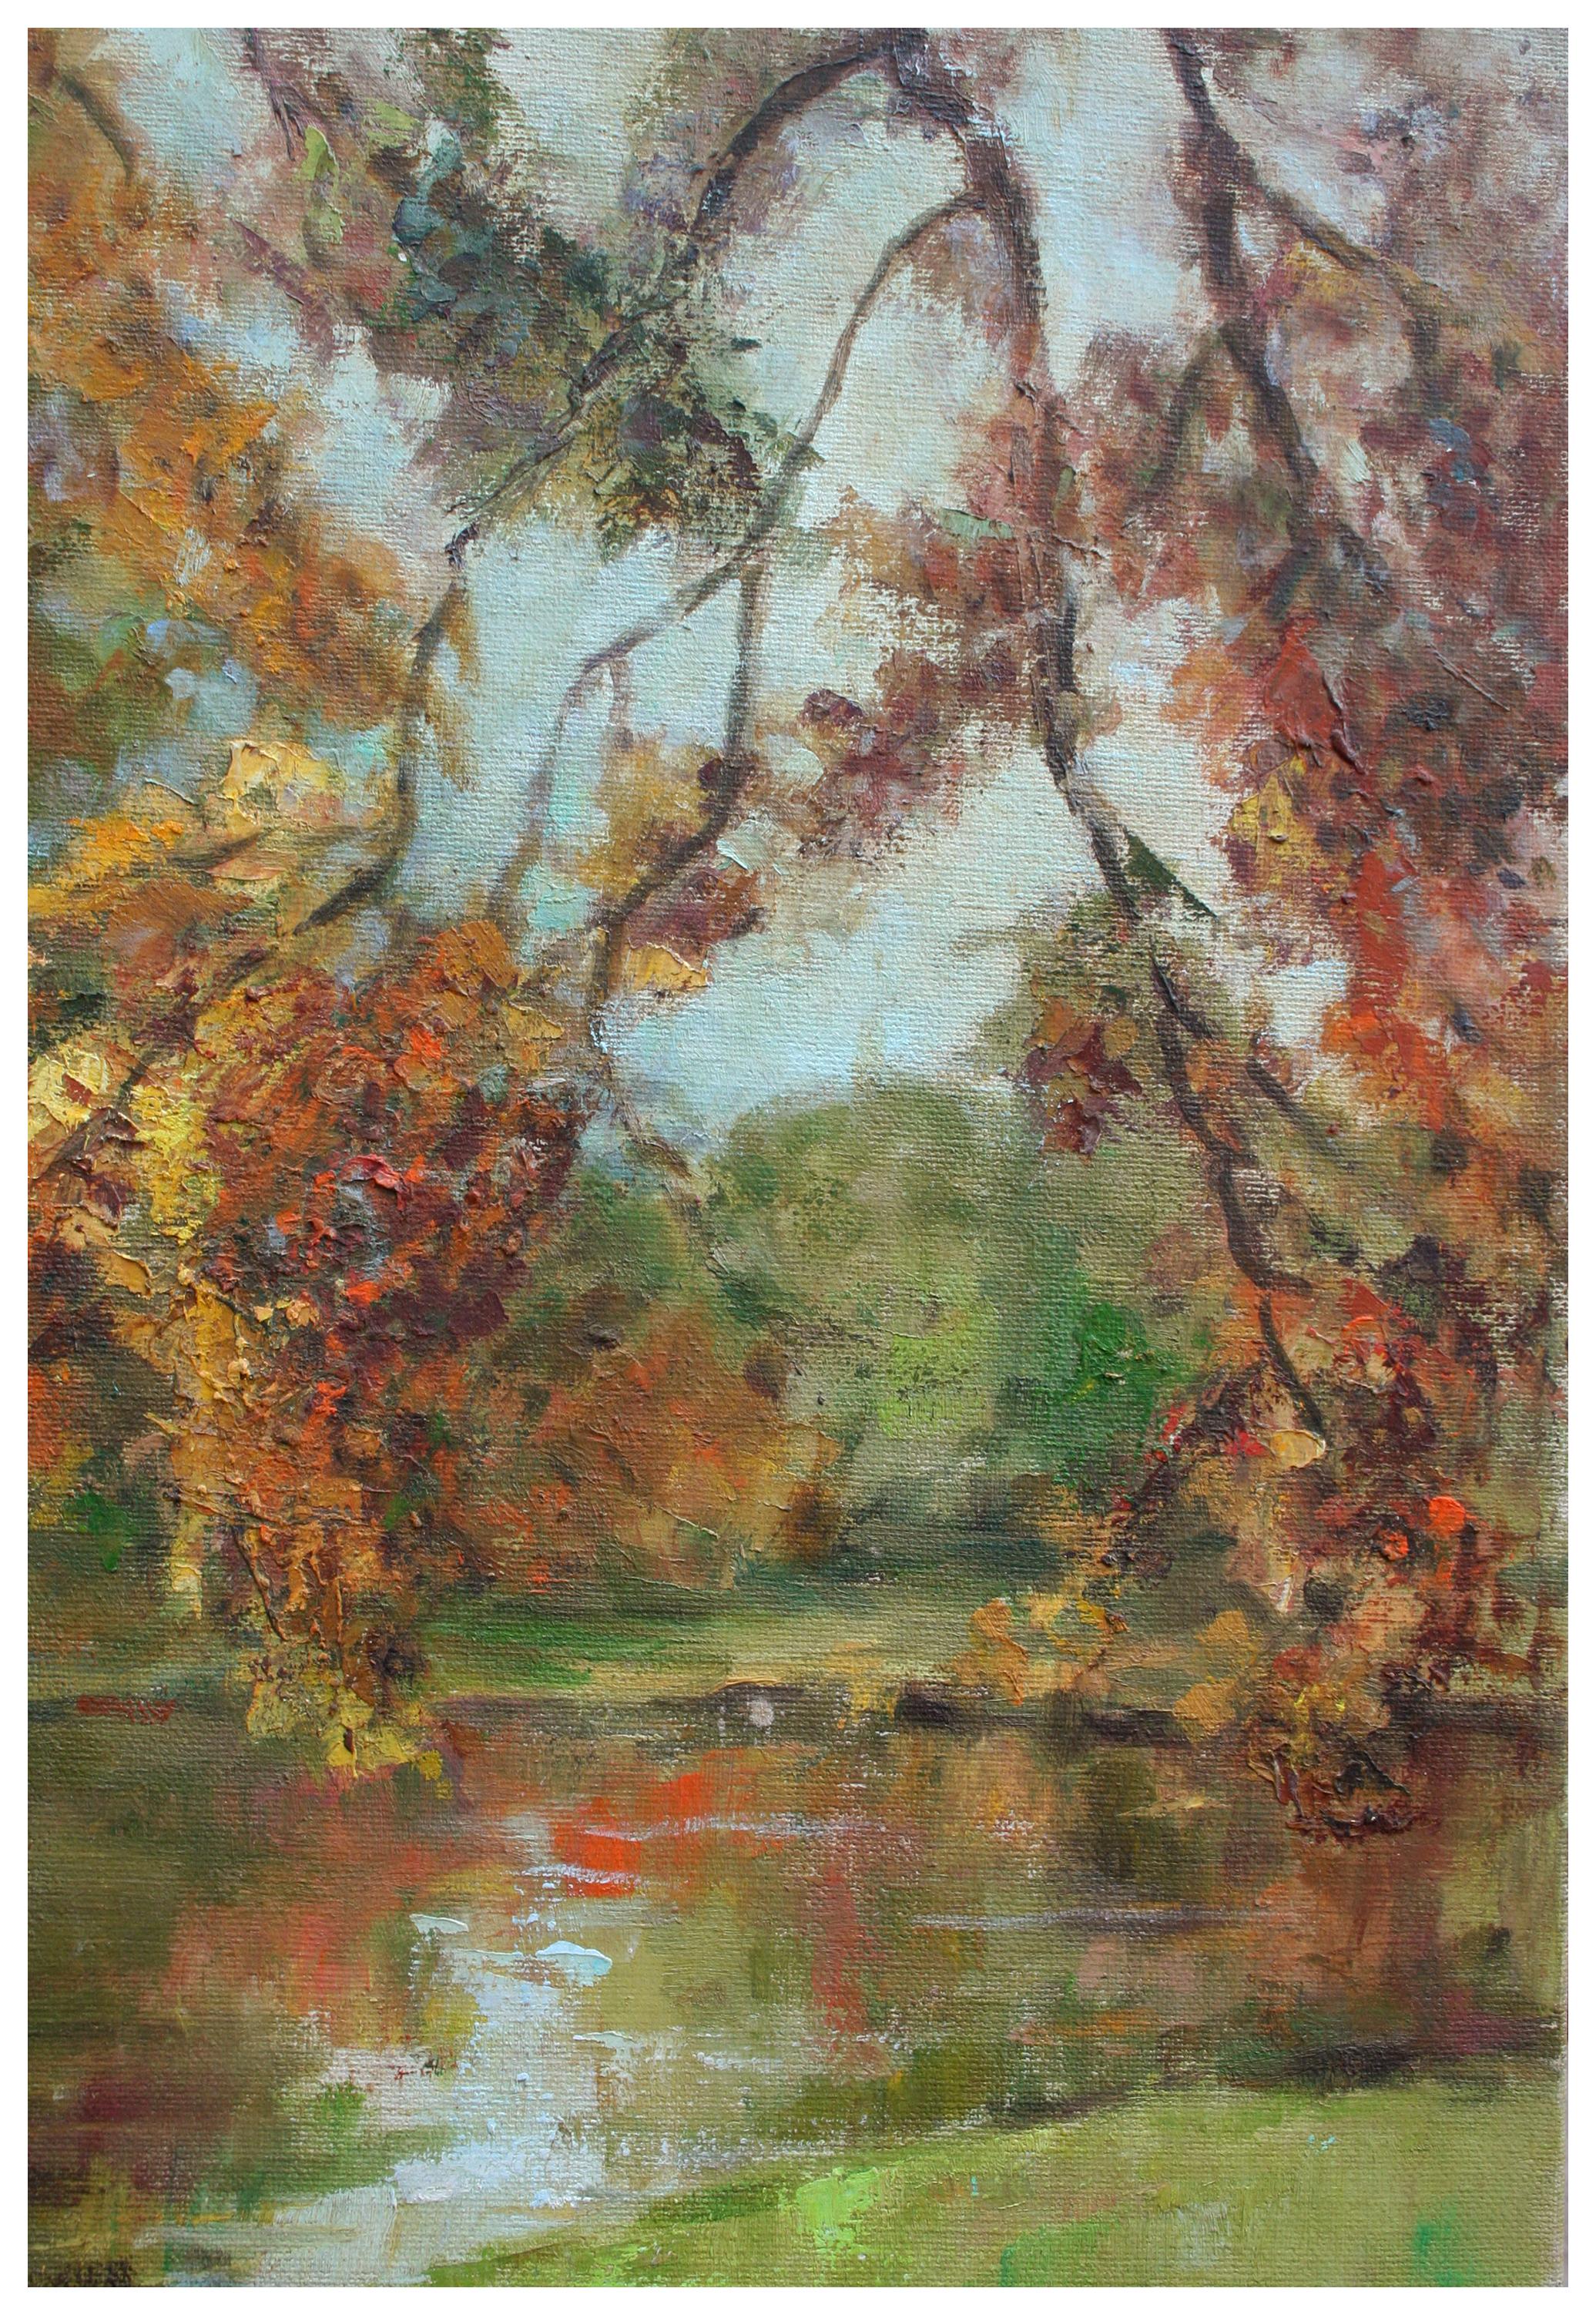 Mid Century Autumn Trees Landscape - Painting by Helen Enoch Gleiforst